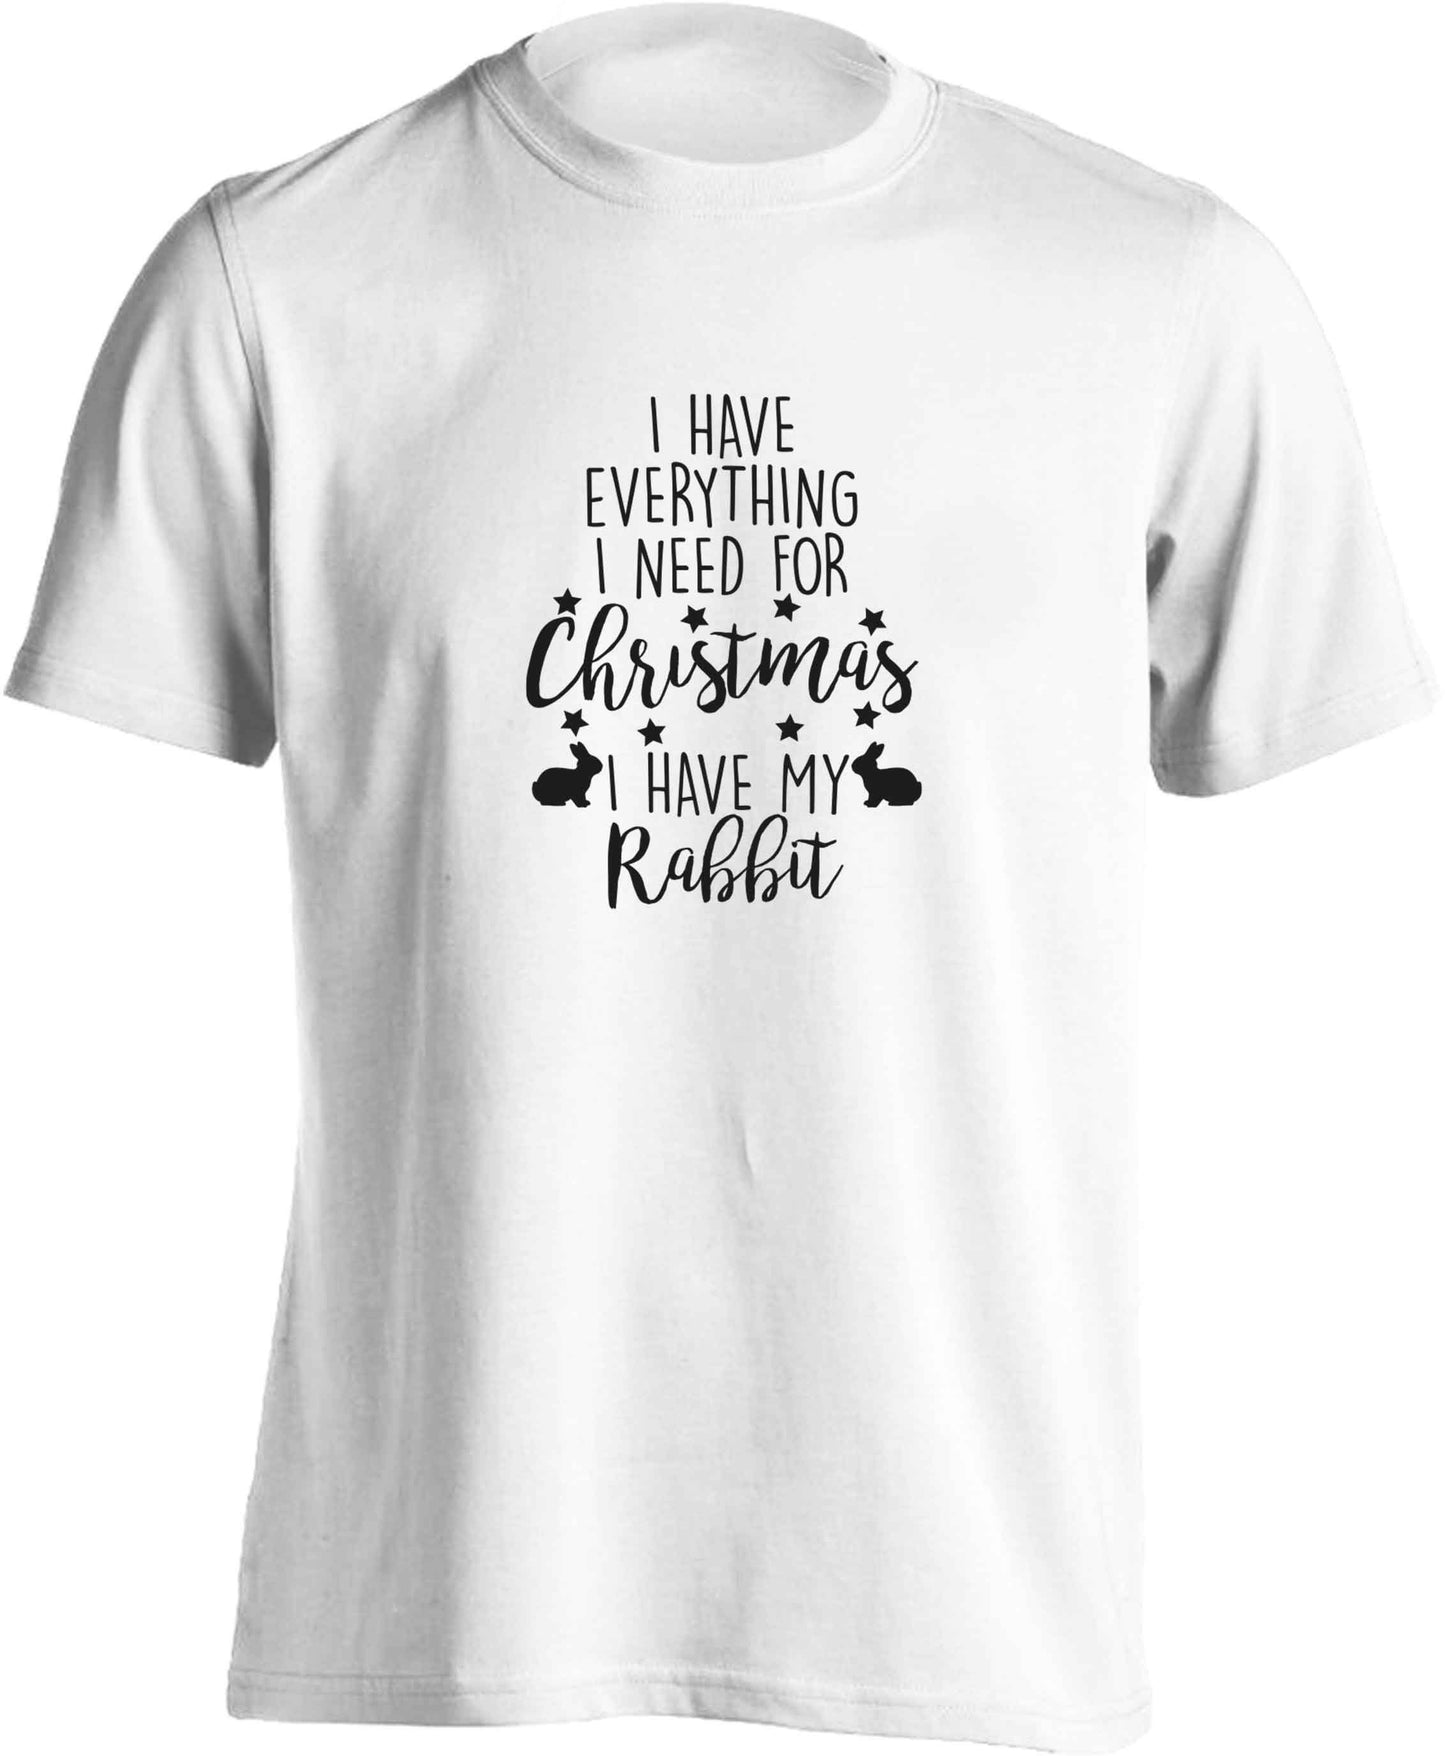 I have everything I need for Christmas I have my rabbit adults unisex white Tshirt 2XL